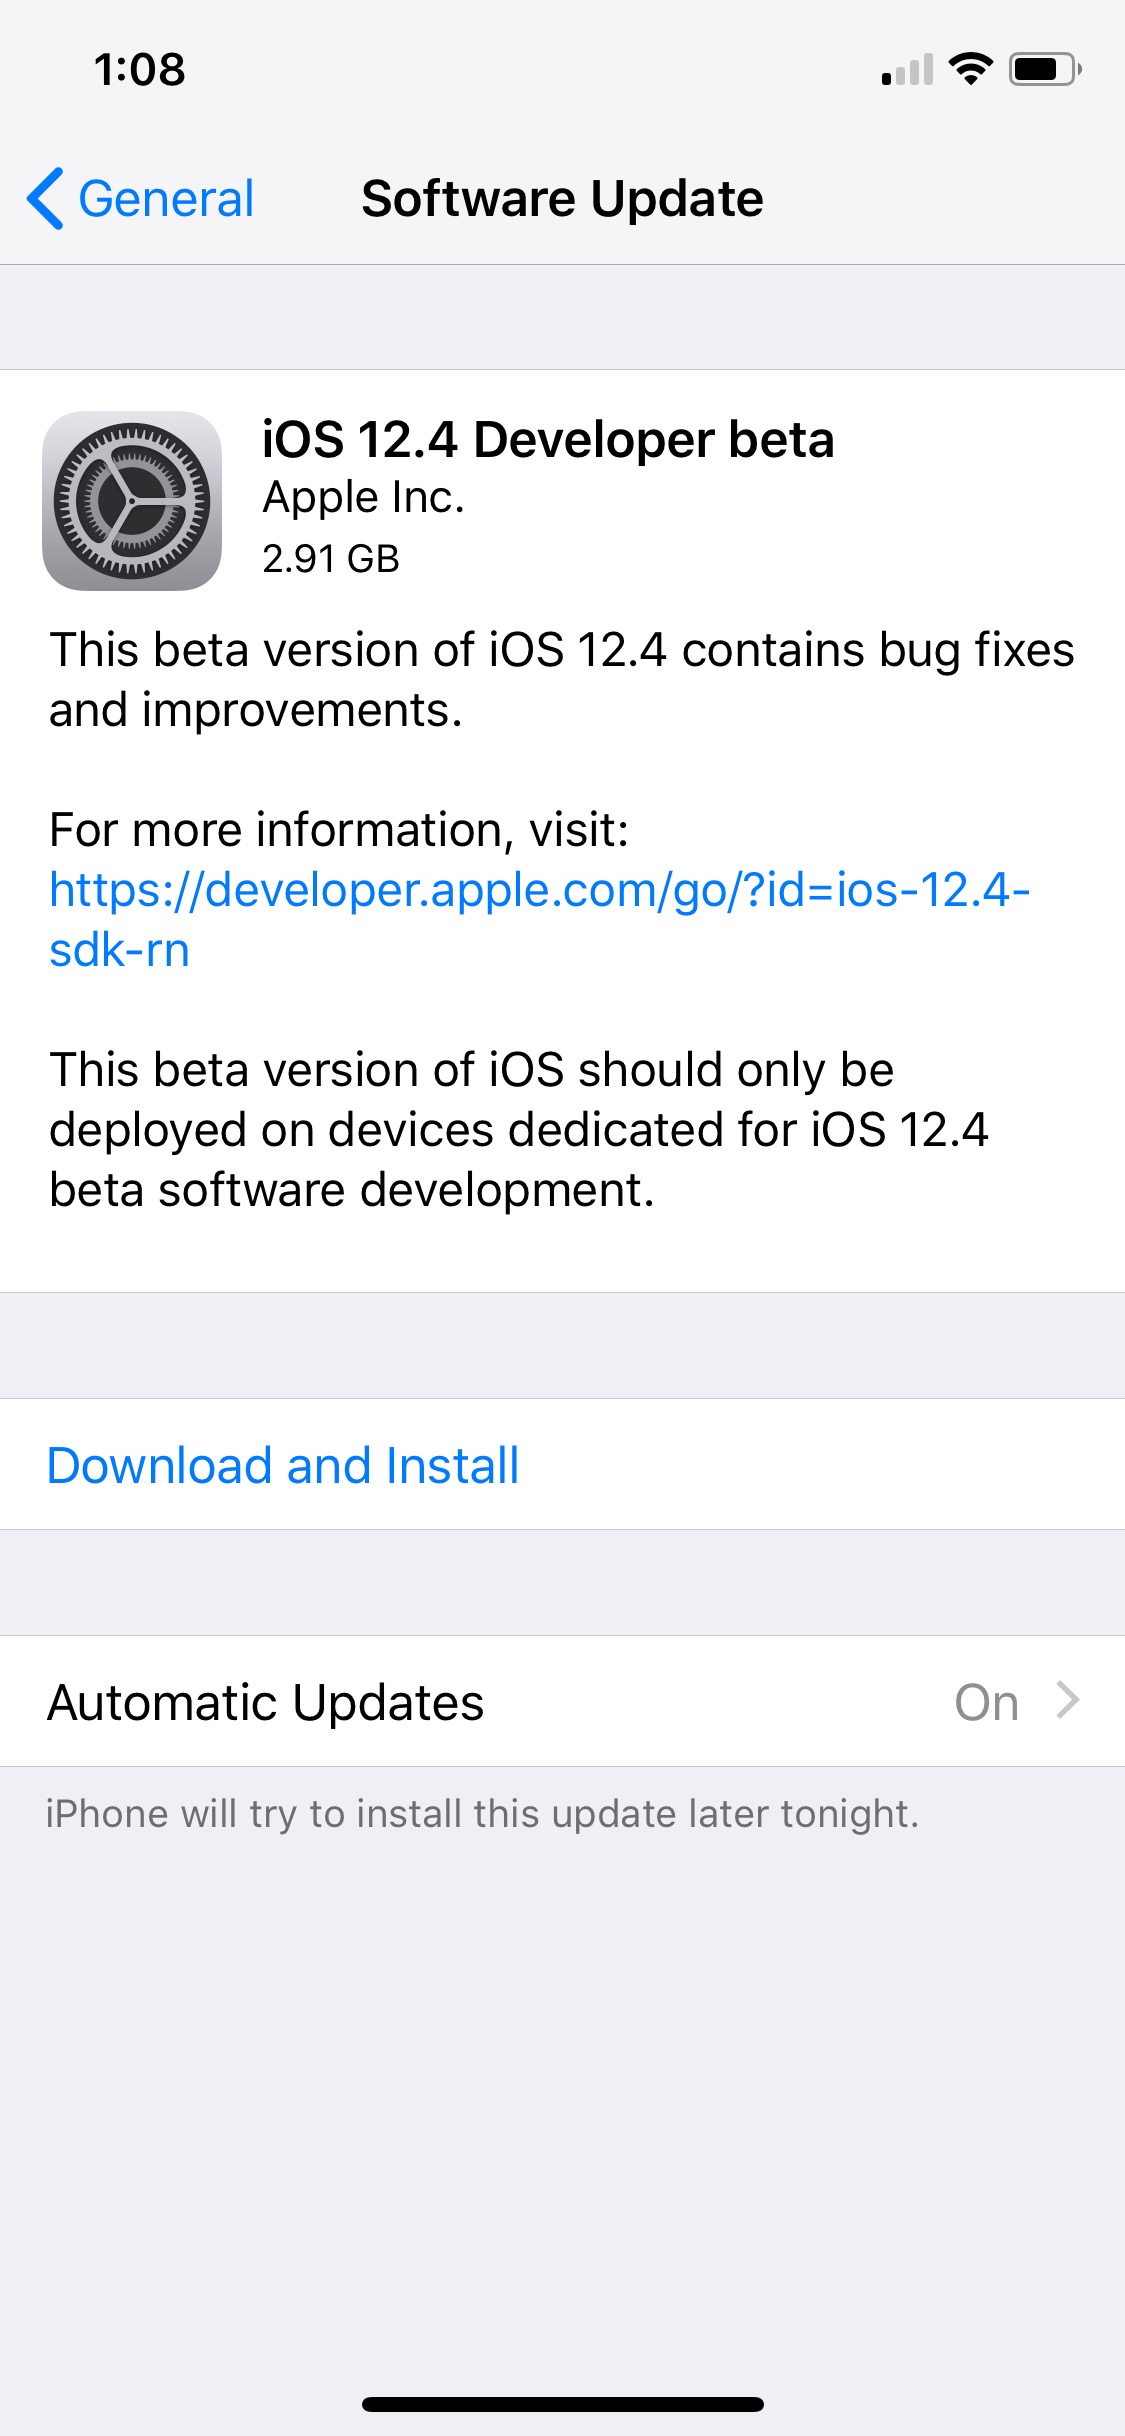 Apple Releases iOS 12.4 Beta [Download]